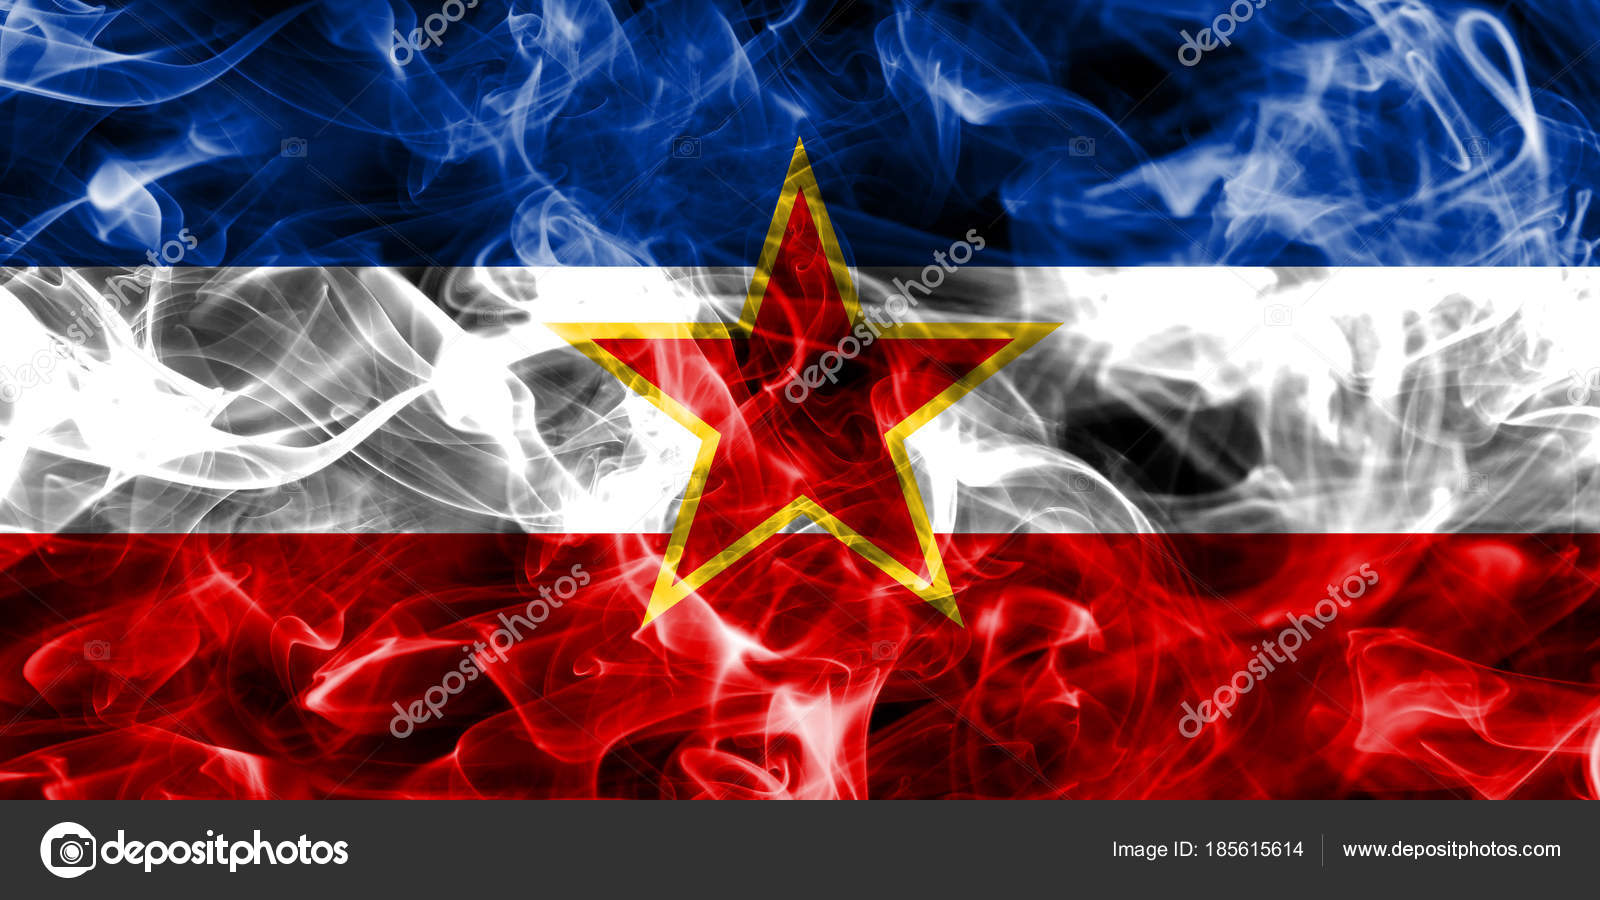 Fall of Yugoslavia by M K